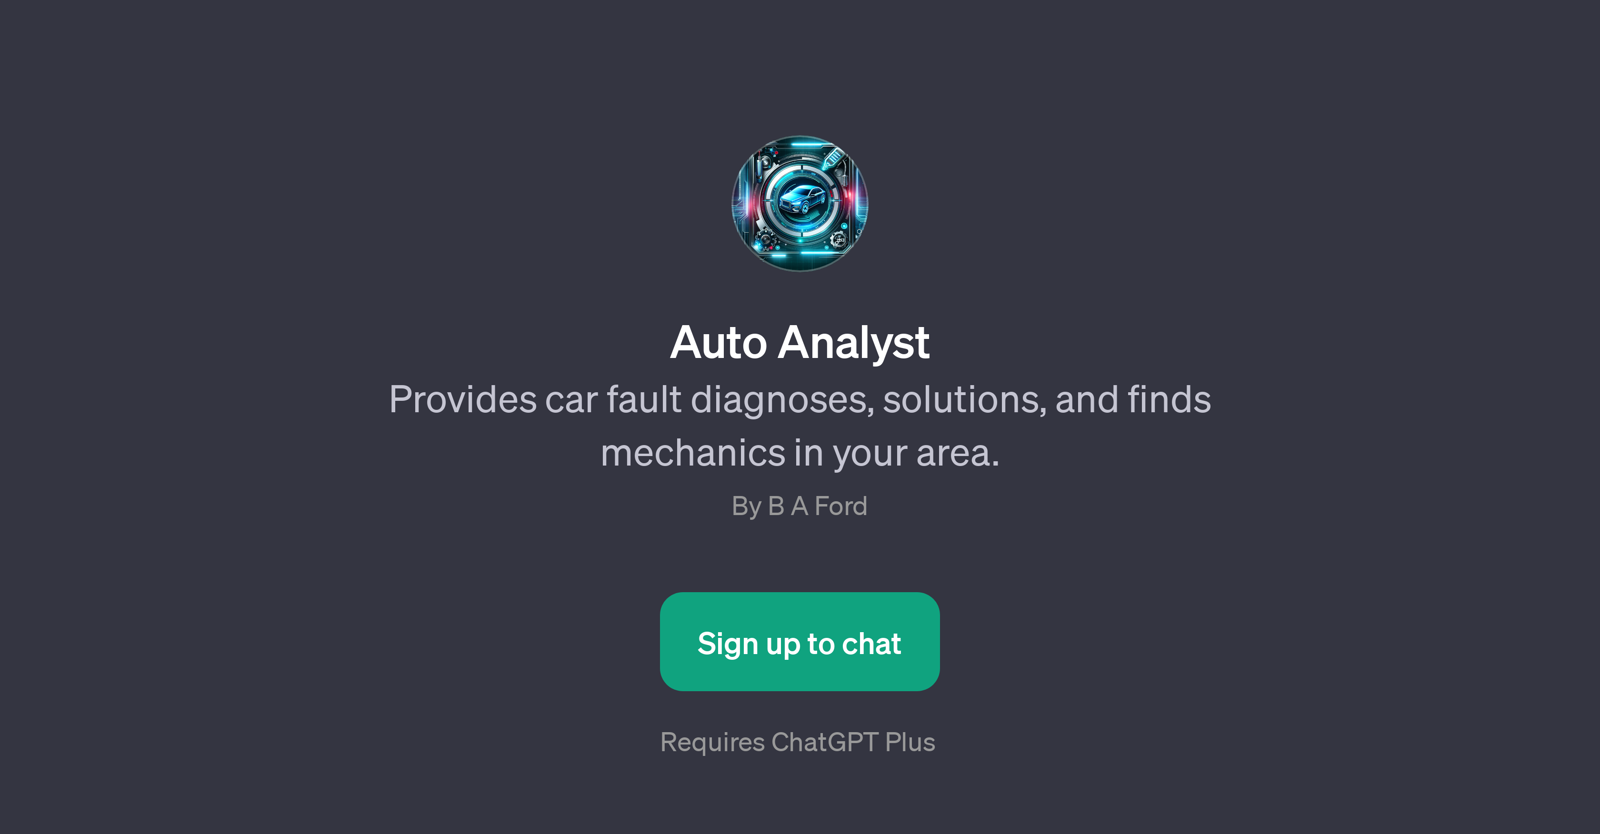 Auto Analyst website